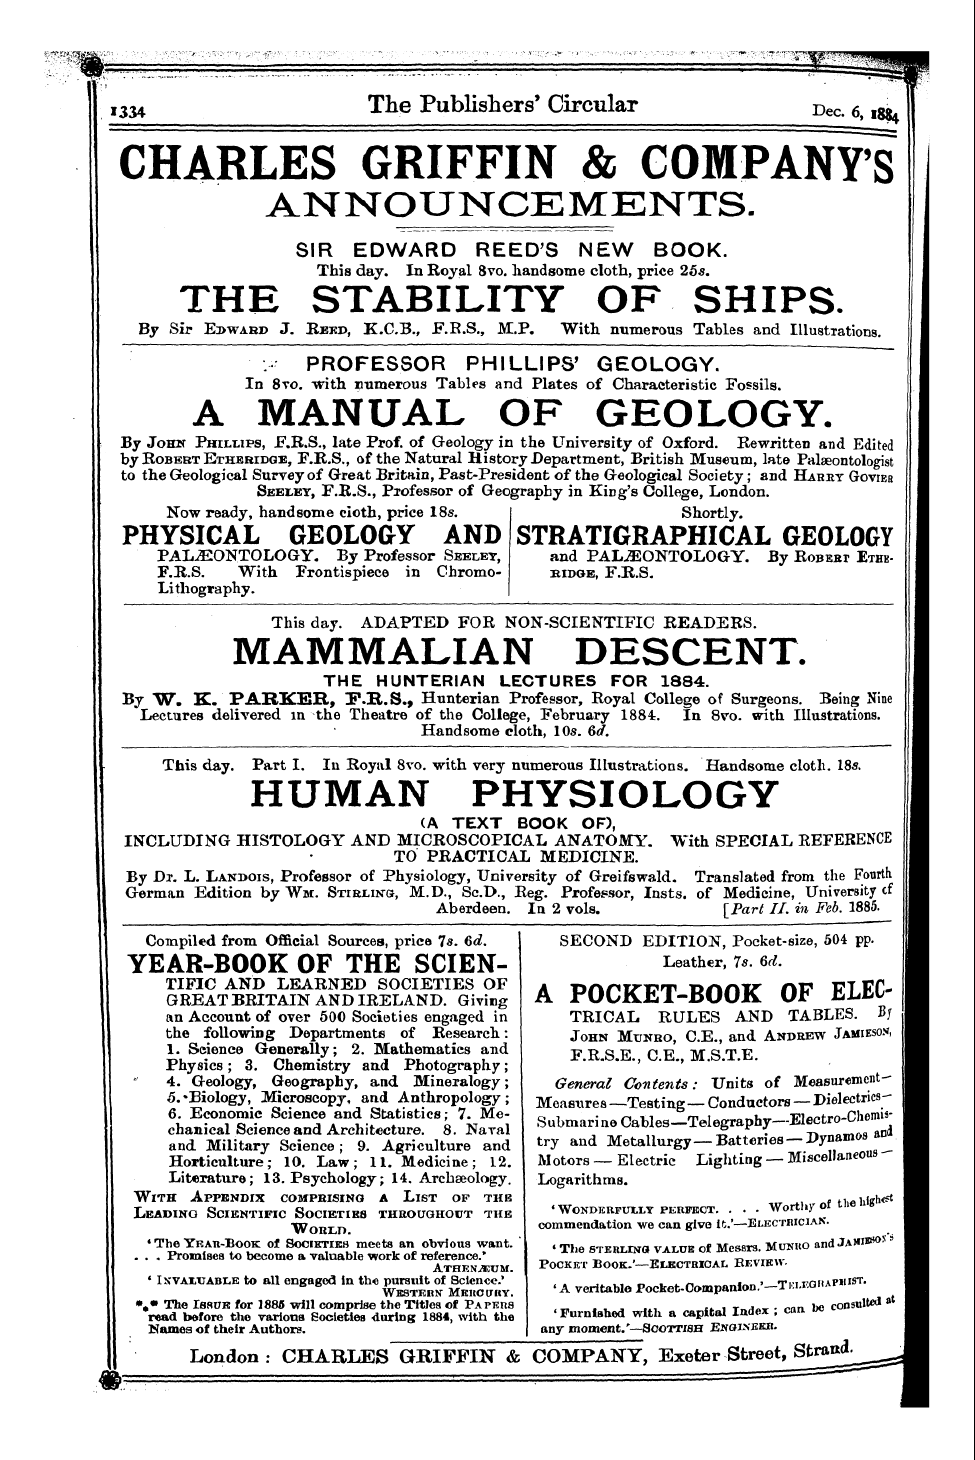 Publishers’ Circular (1880-1890): jS F Y, 1st edition - Ad13801